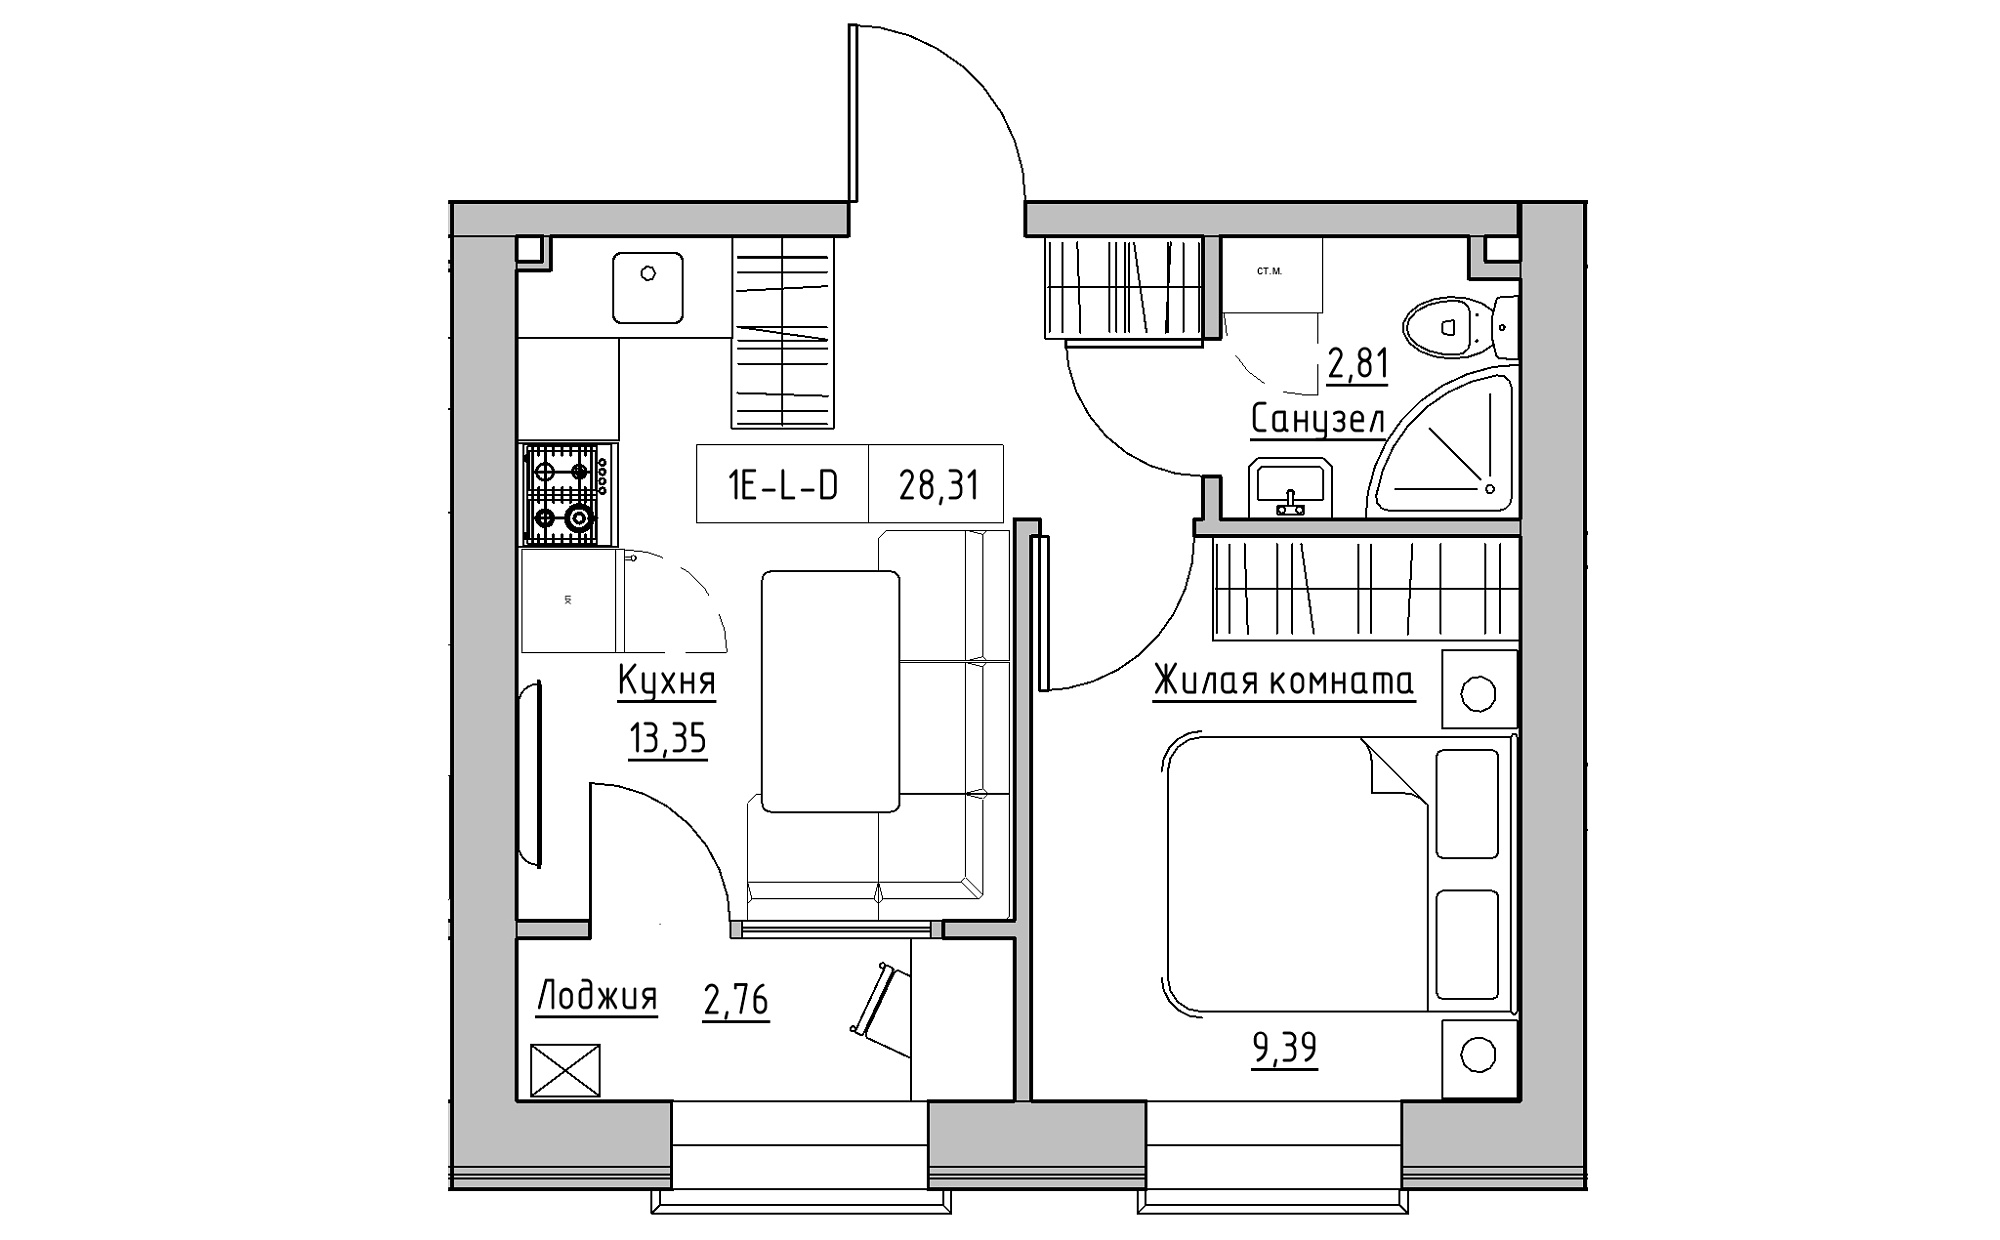 Planning 1-rm flats area 28.31m2, KS-022-05/0001.